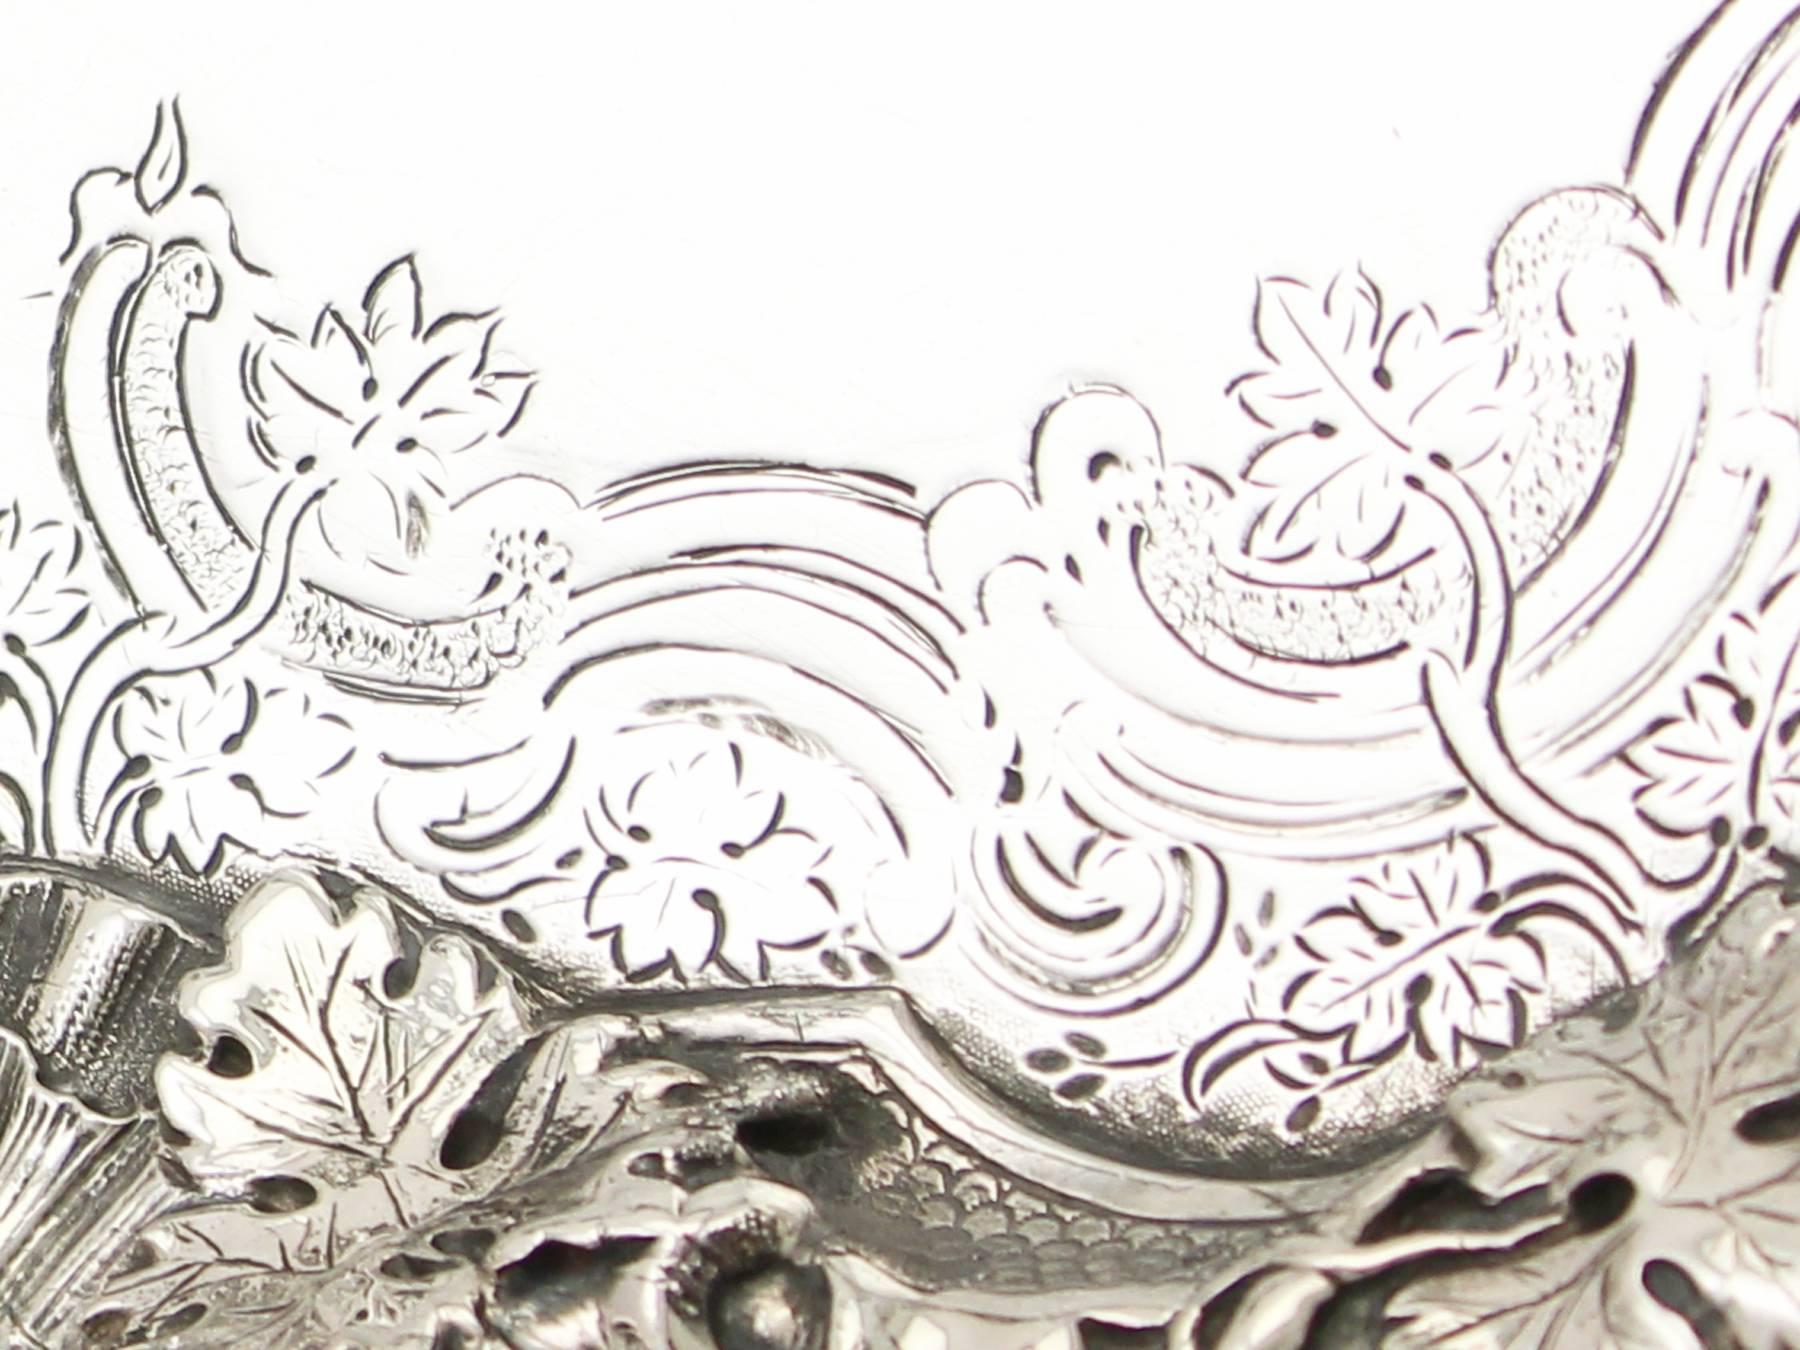 Antique George II Rococo Style Sterling Silver Salvers by Paul de Lamerie 1